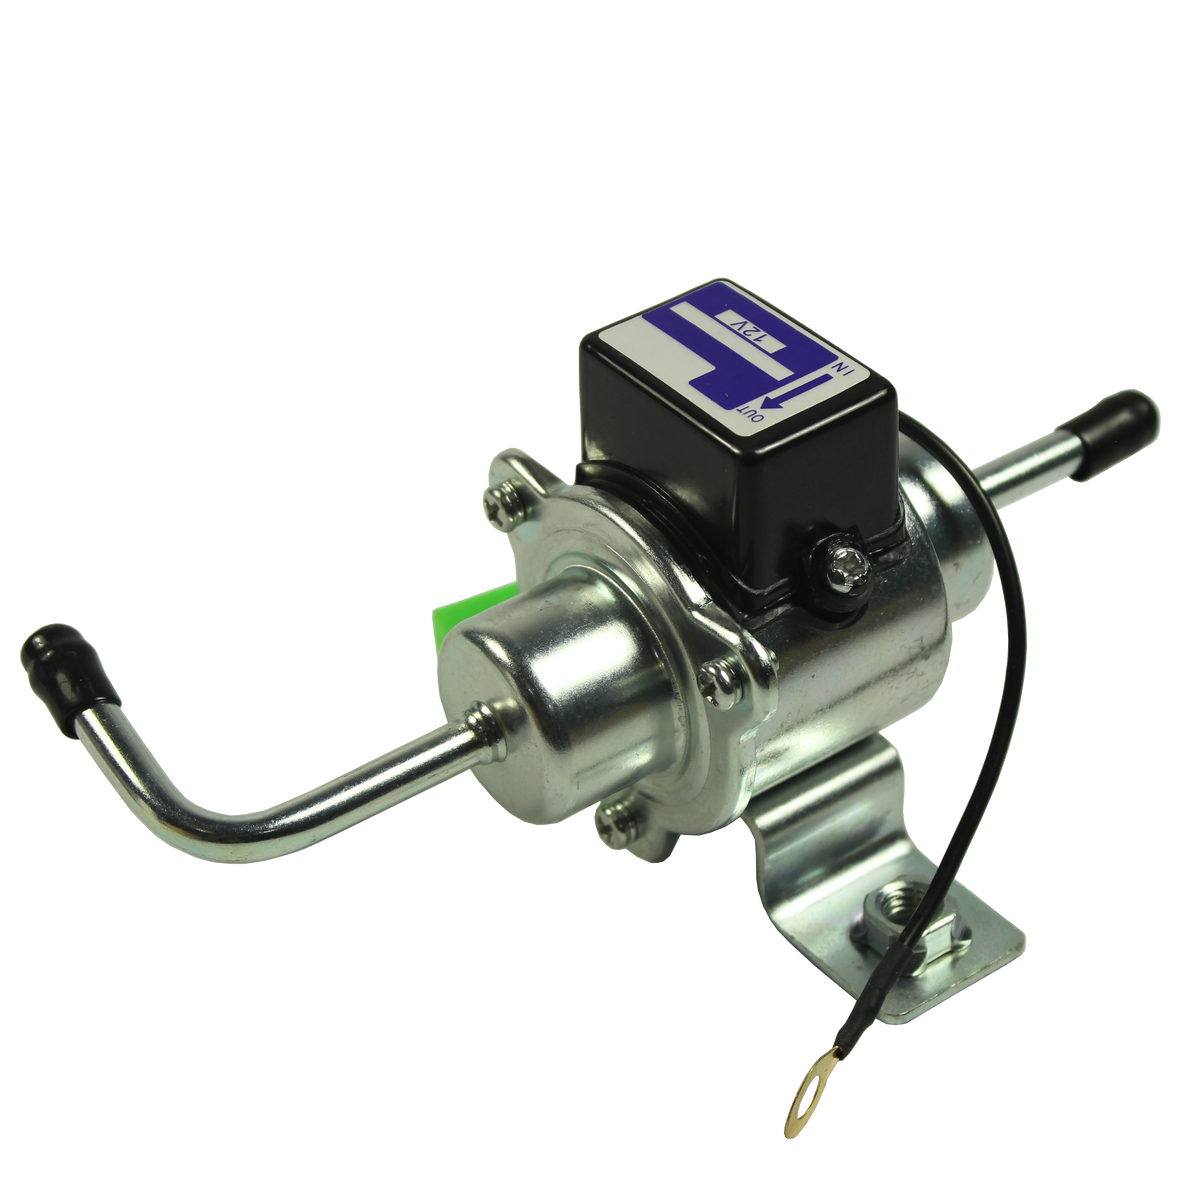  JCKLW Electric Fuel Pump 12V Universal Transfer Inline